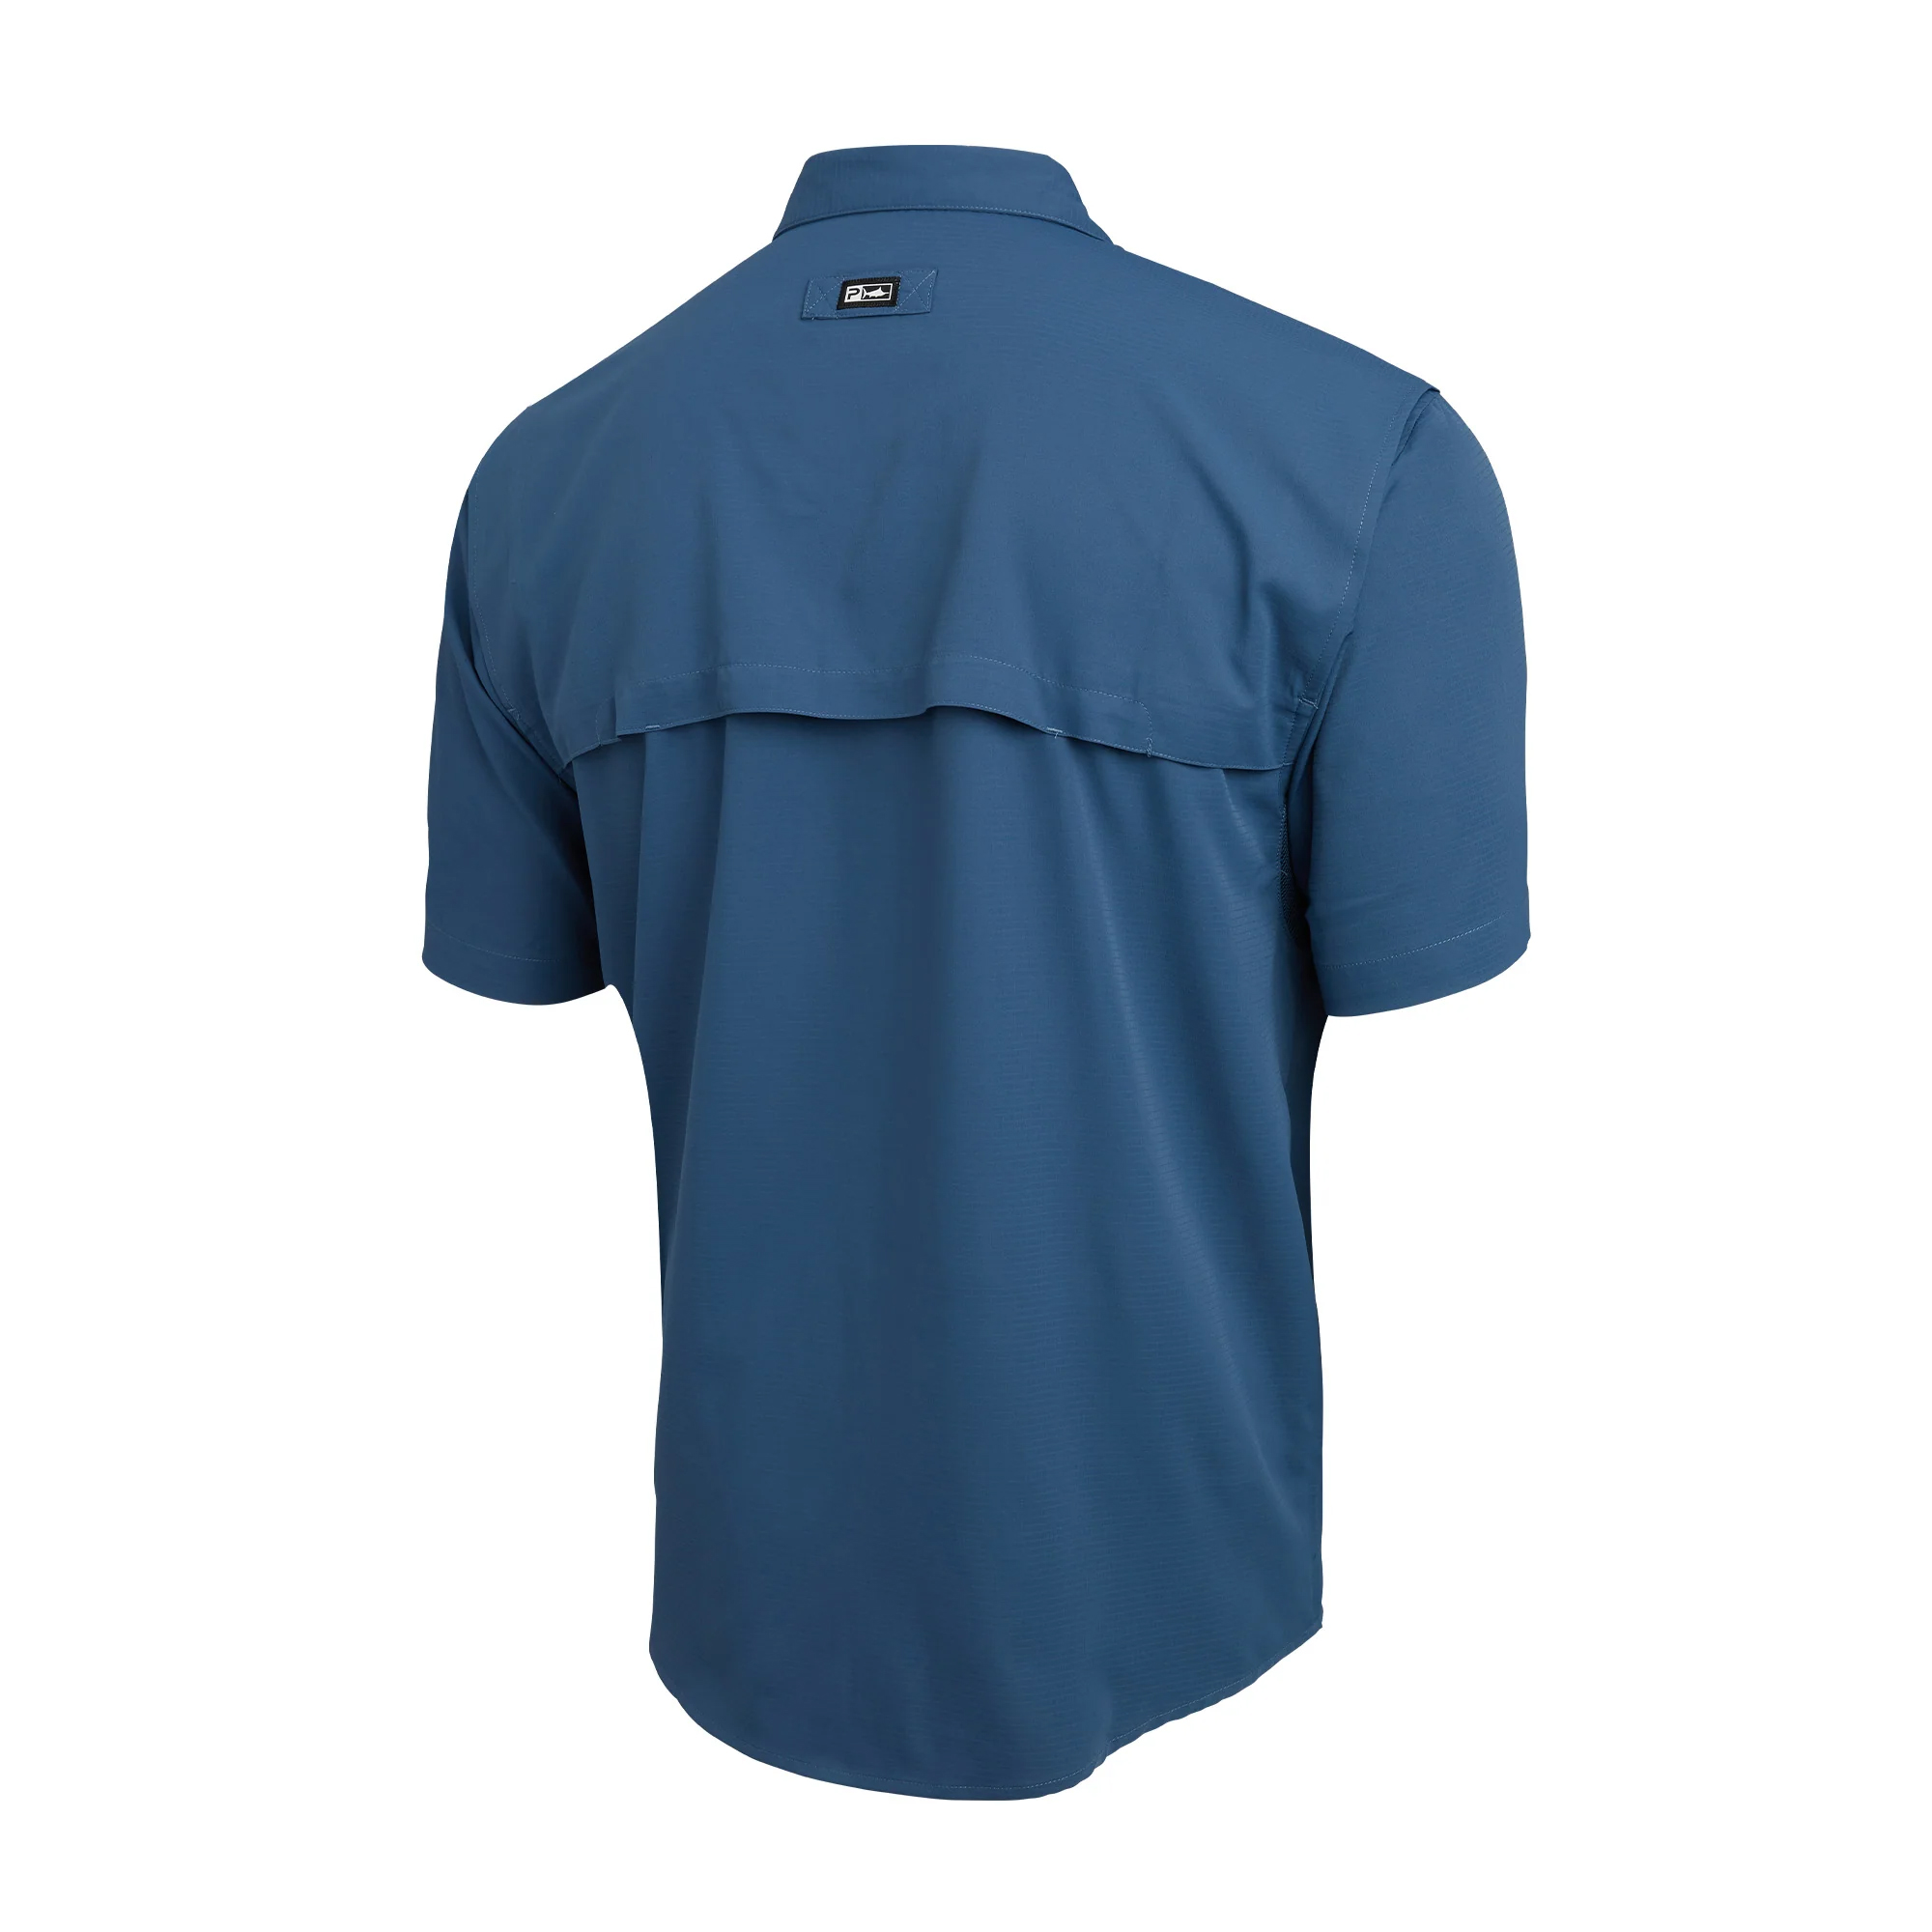 Pelagic Keys Short Sleeve Button Down Performance Shirt (Men’s)